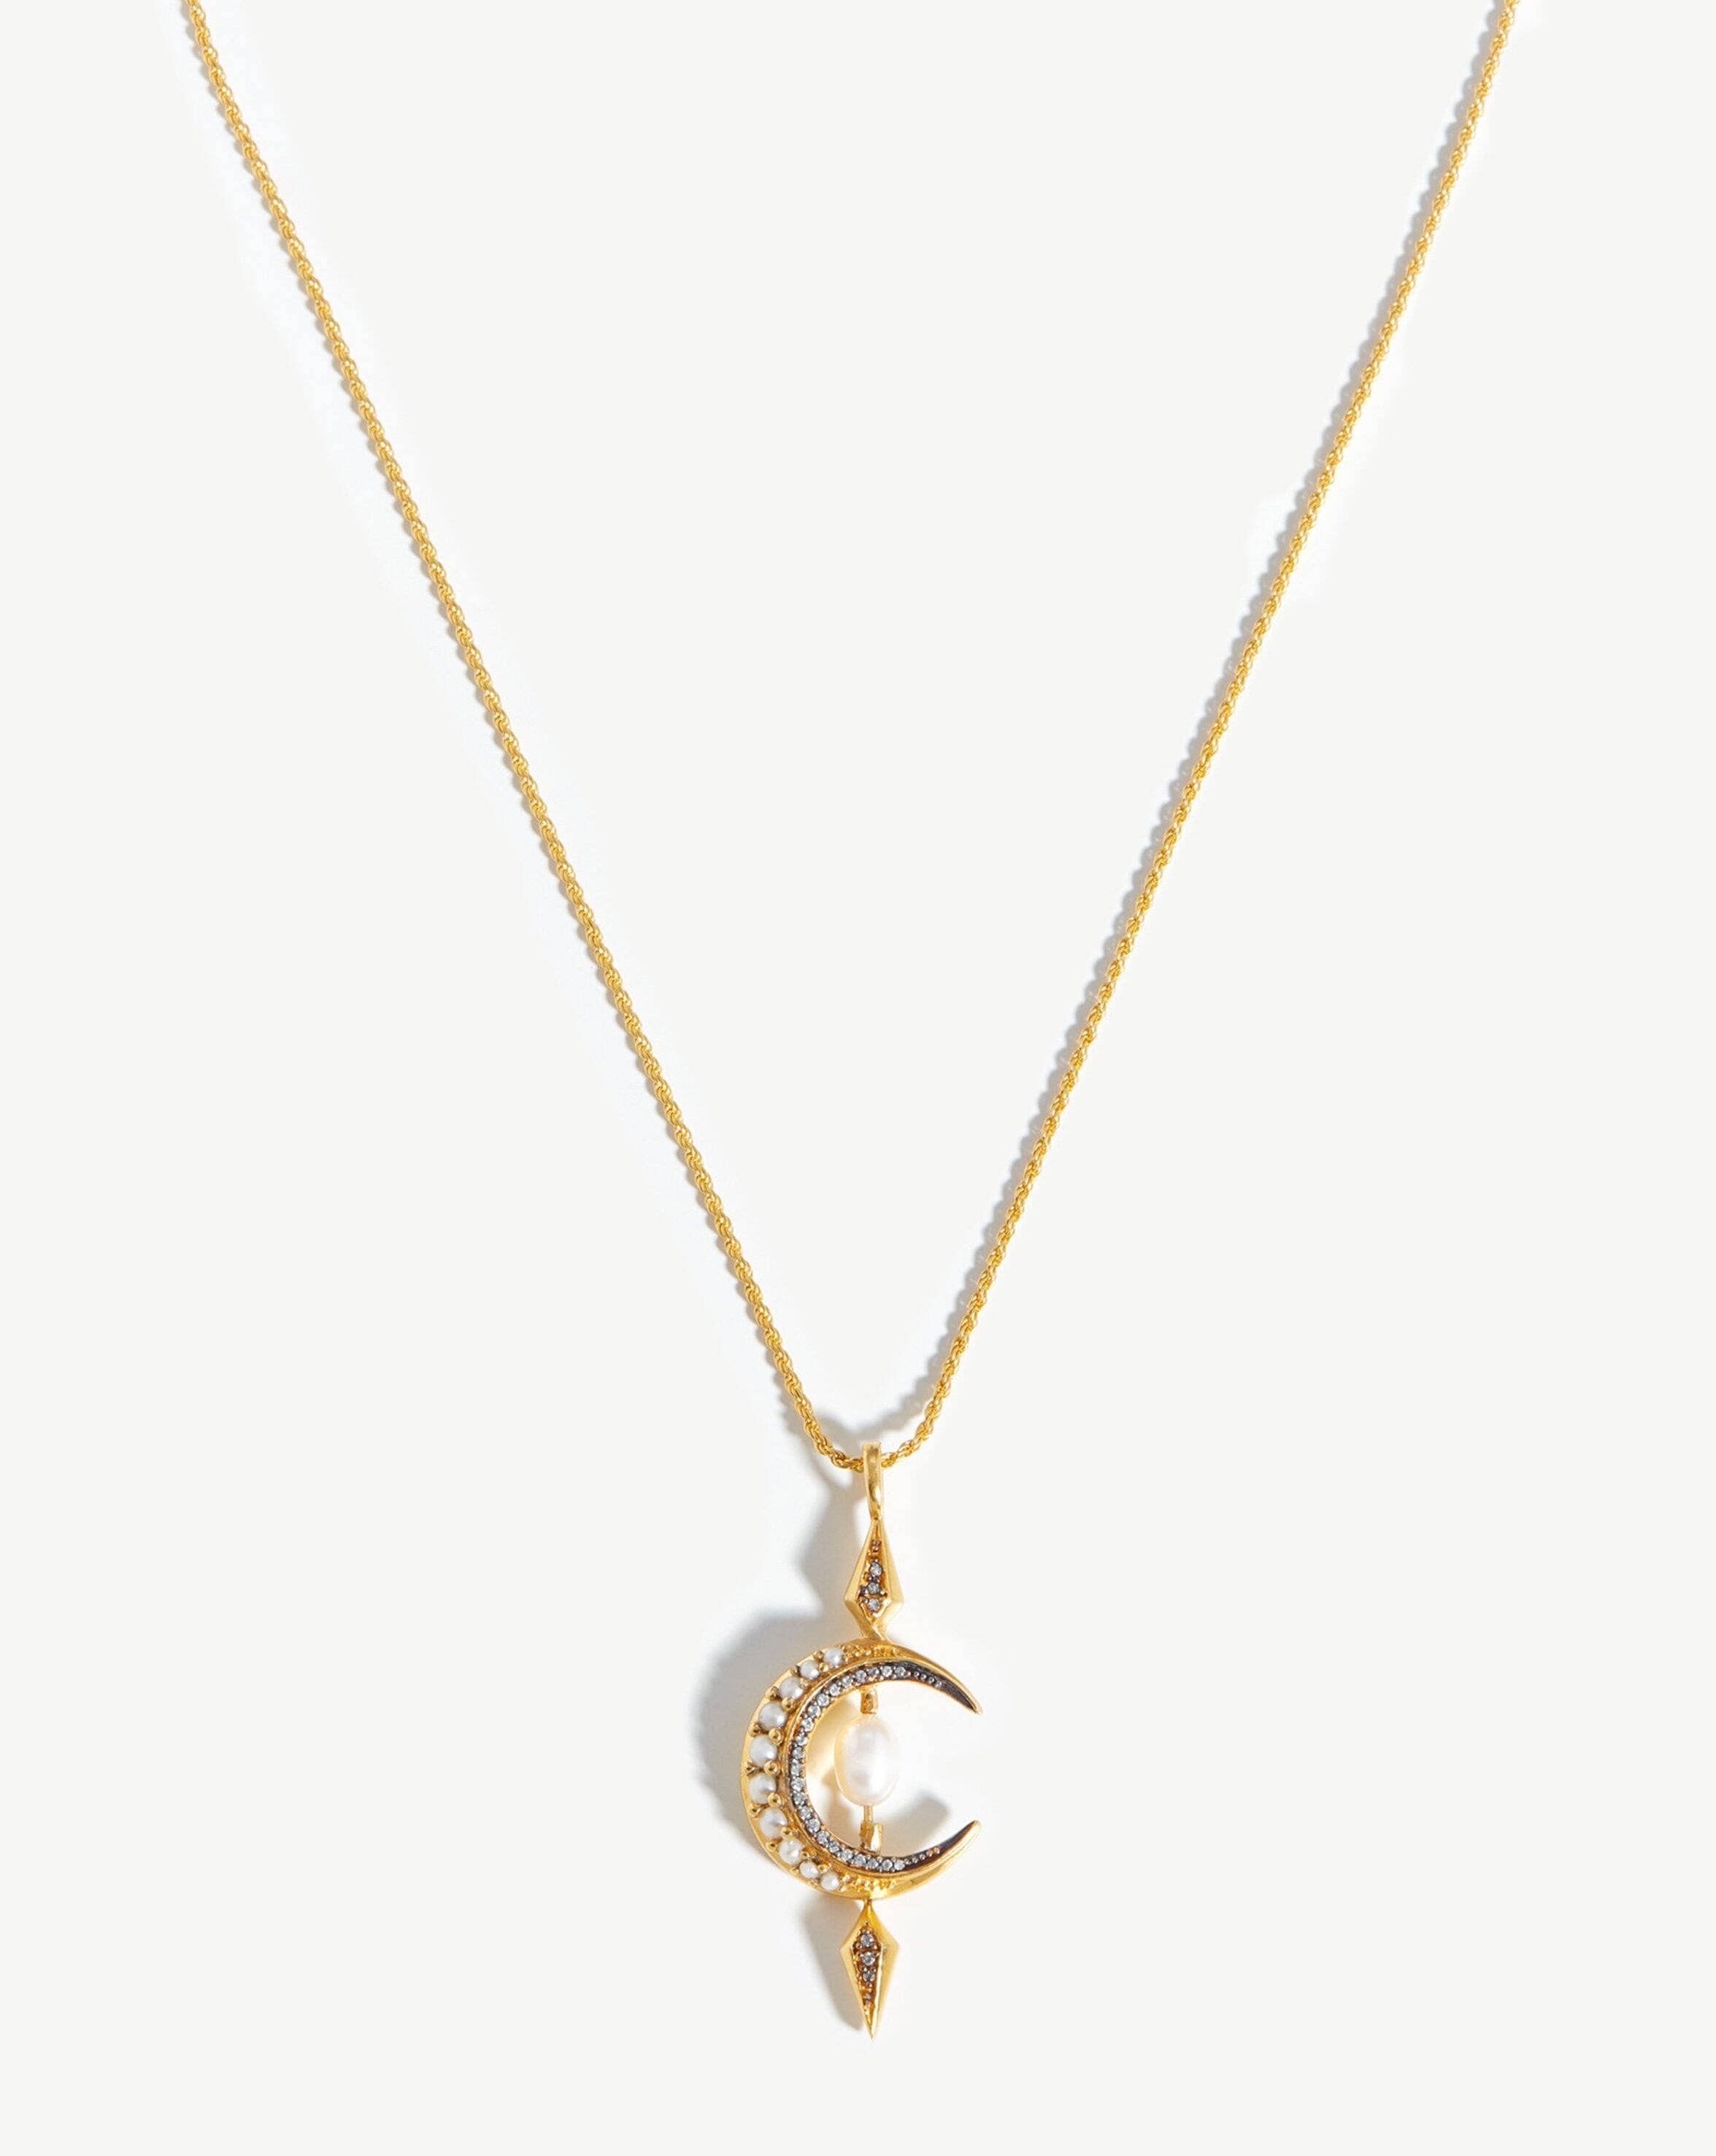 Star Blossom Necklace Emerald - ShopperBoard